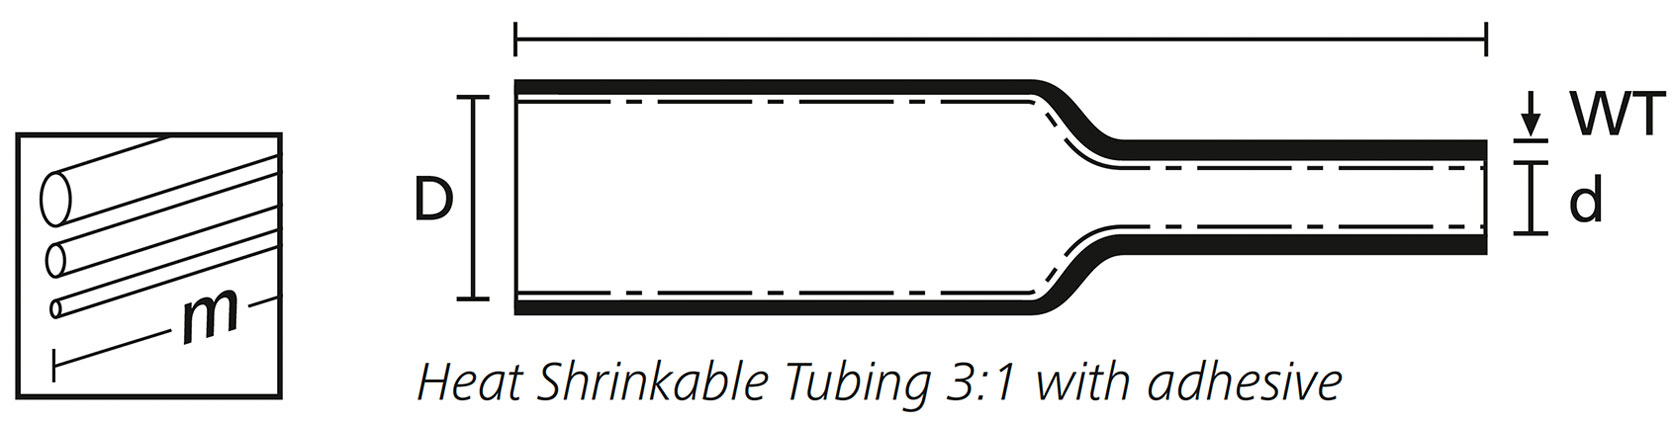 Flame Retardant Heat Shrinkable Tubing 3:1, TA37 Series